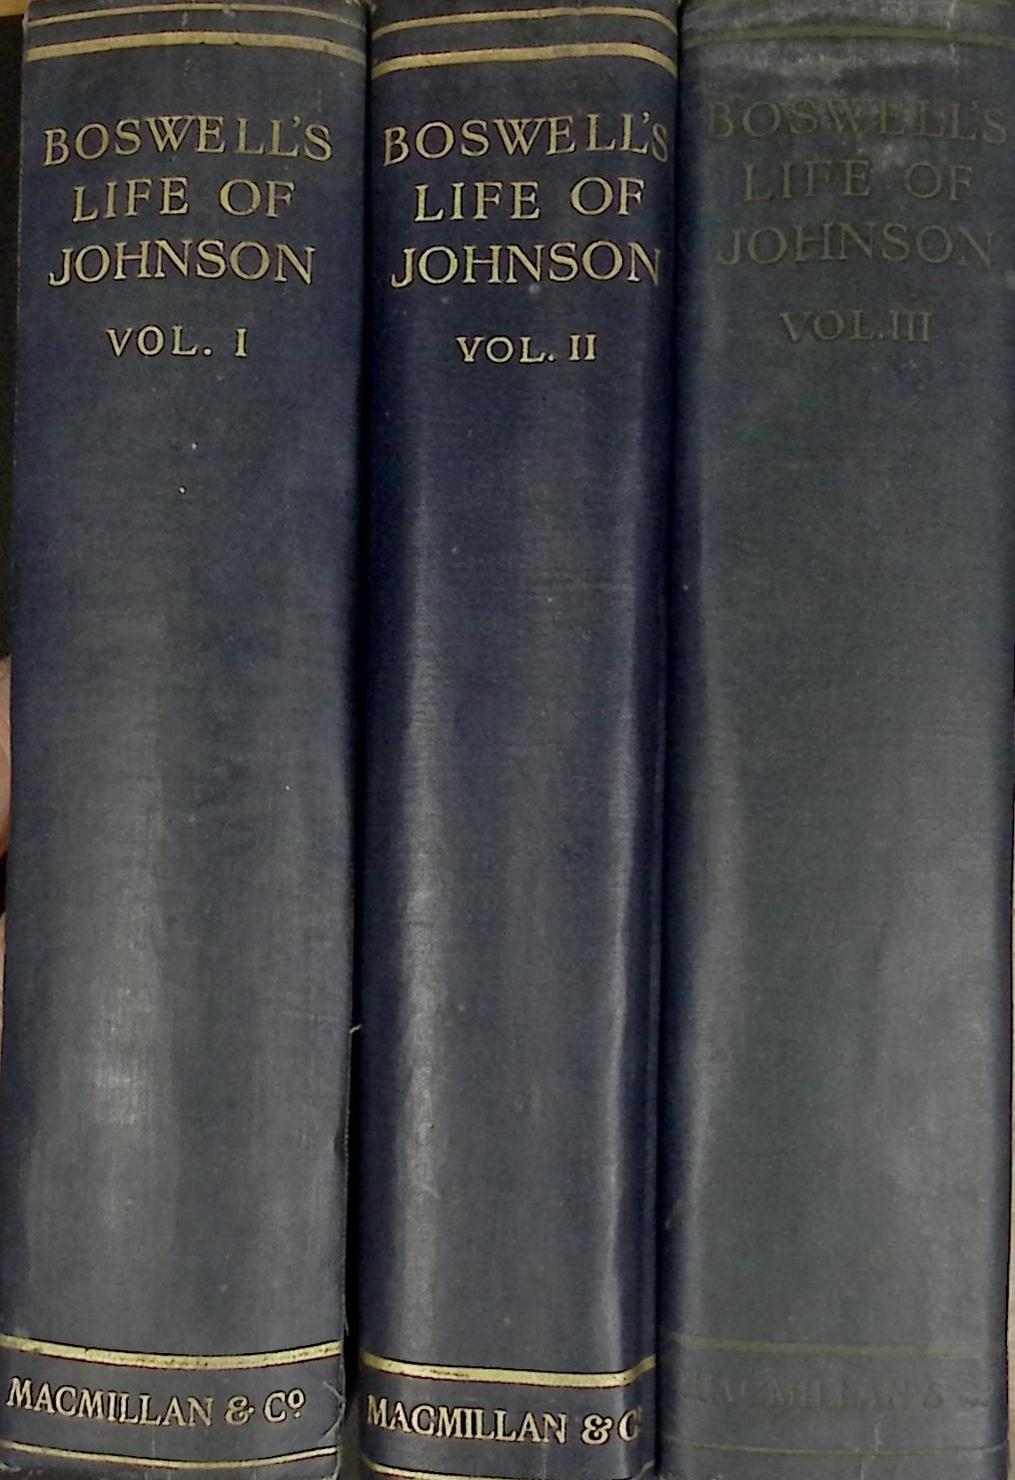 Boswell's Life of Johnson. 3 volume set 1912. Macmillan edition.